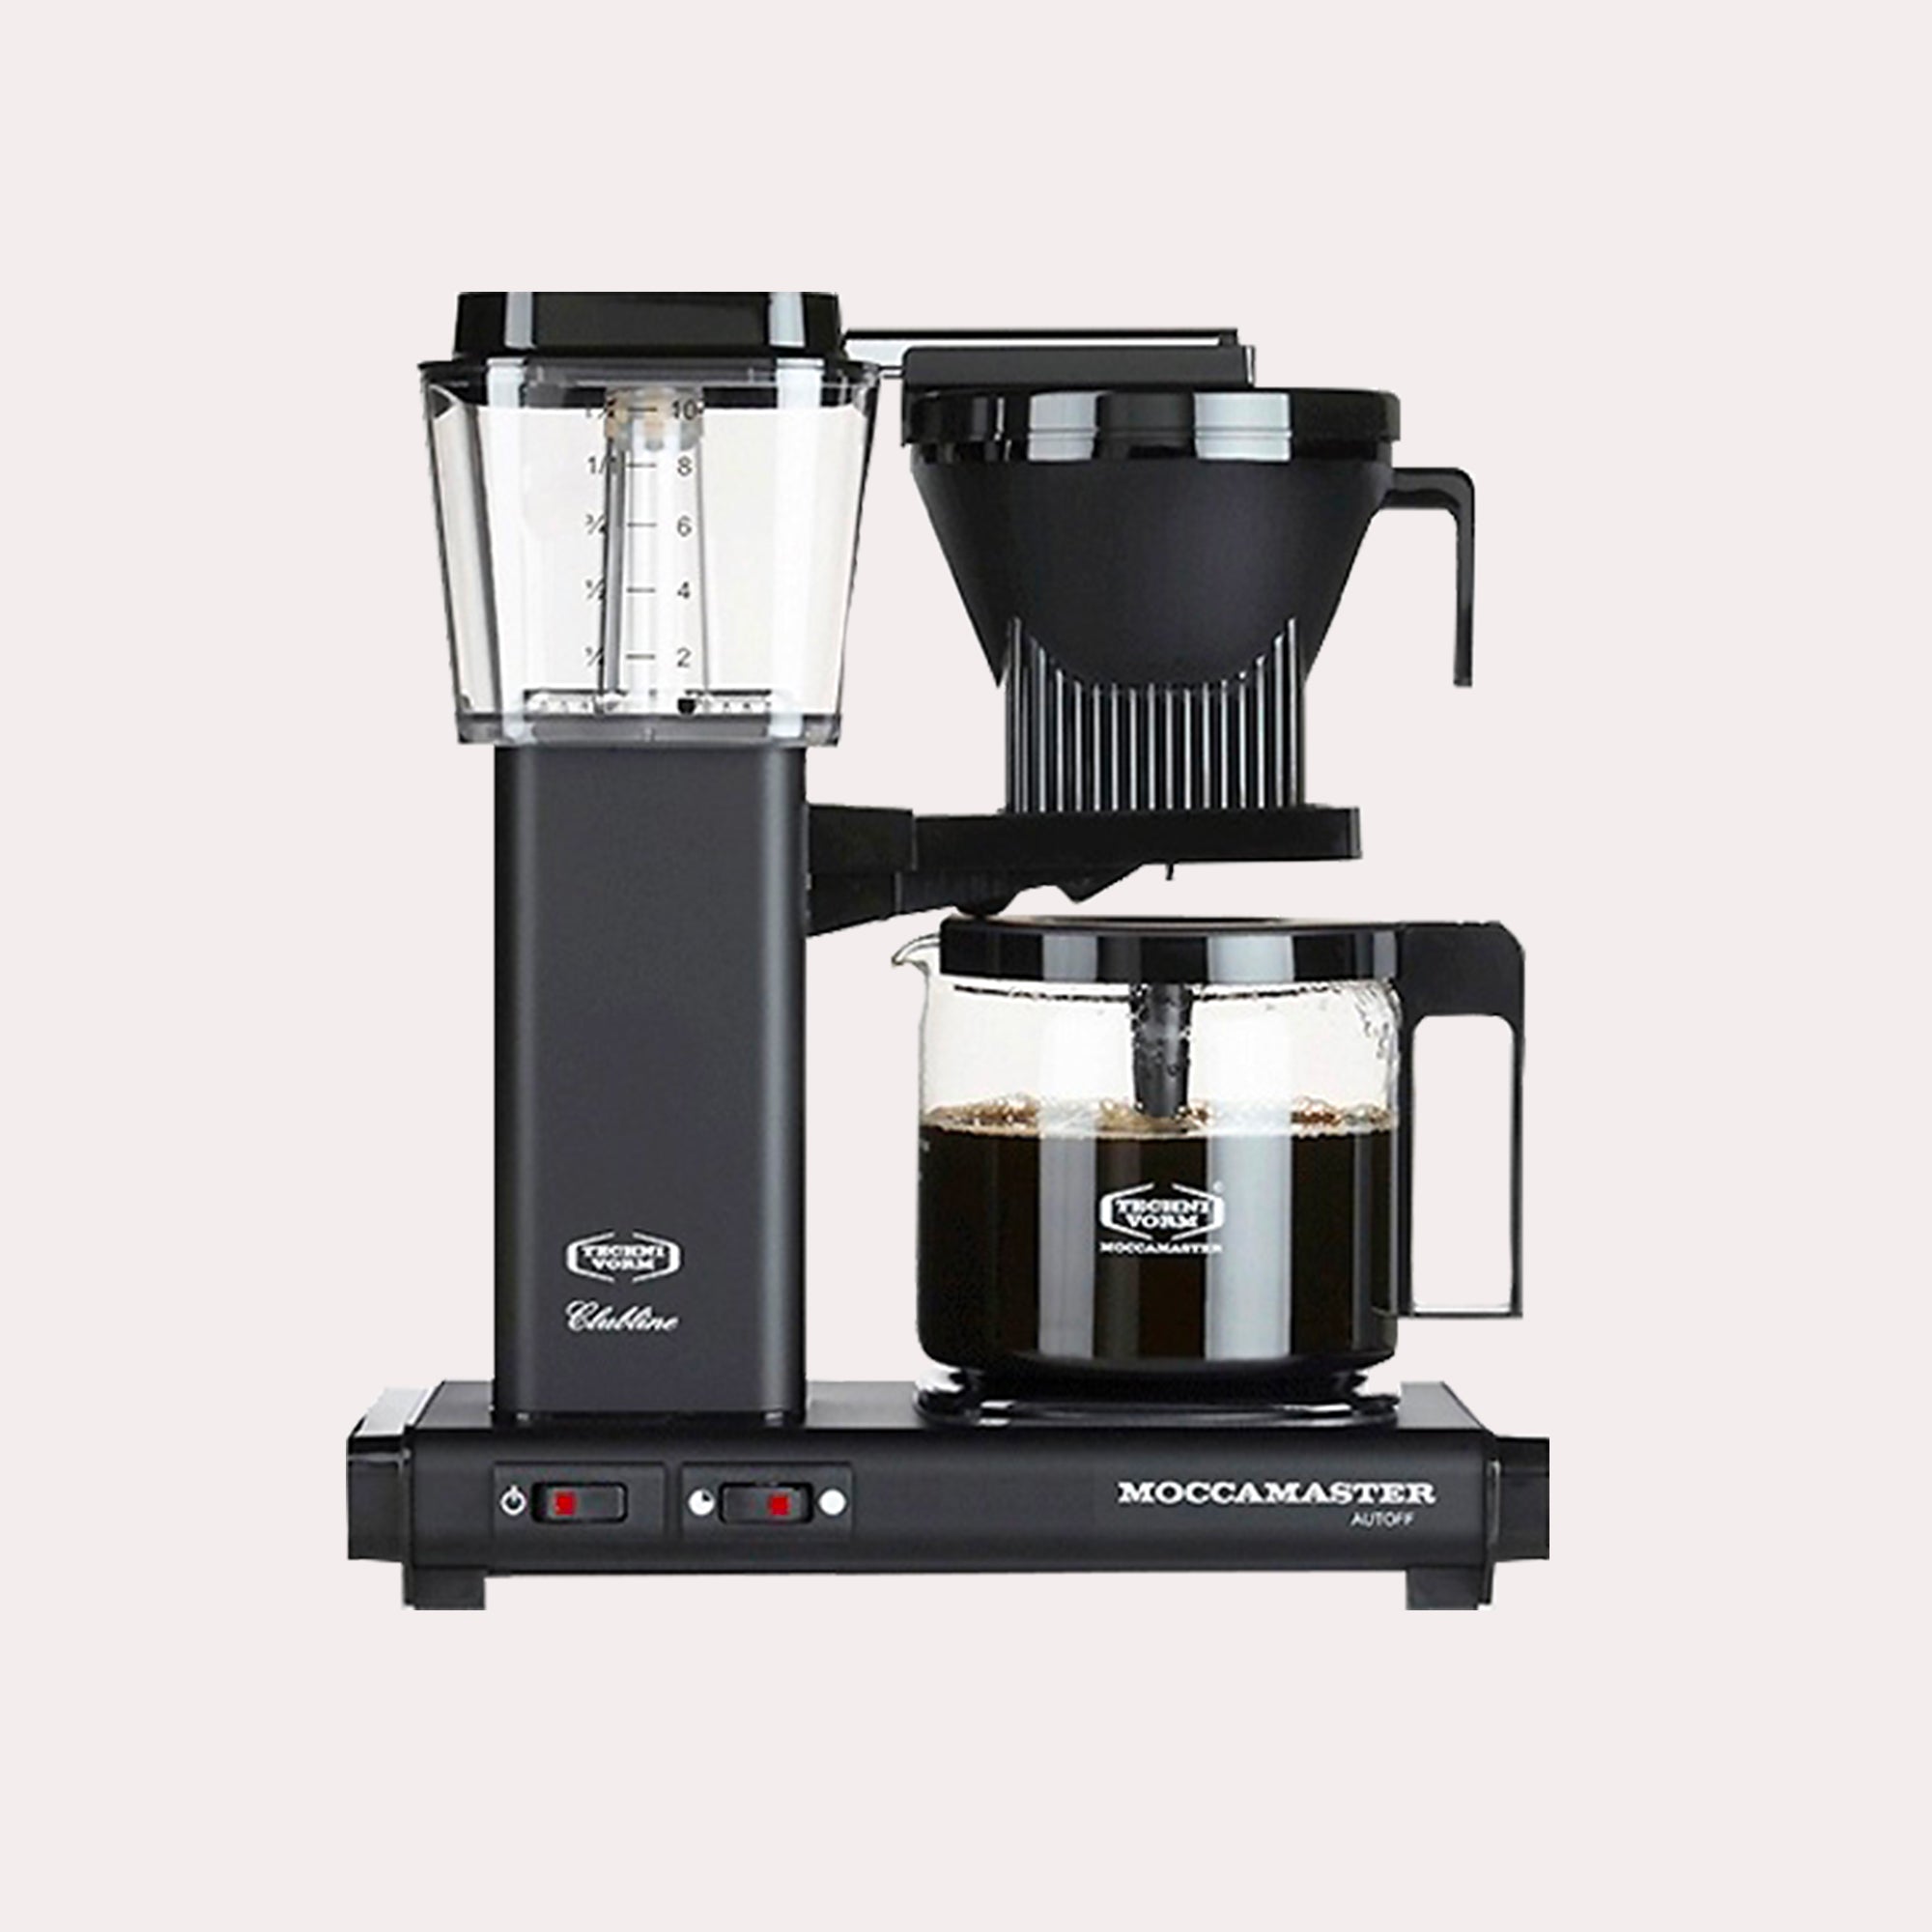 Filter Coffee Makers - Araku : Specialty Coffee